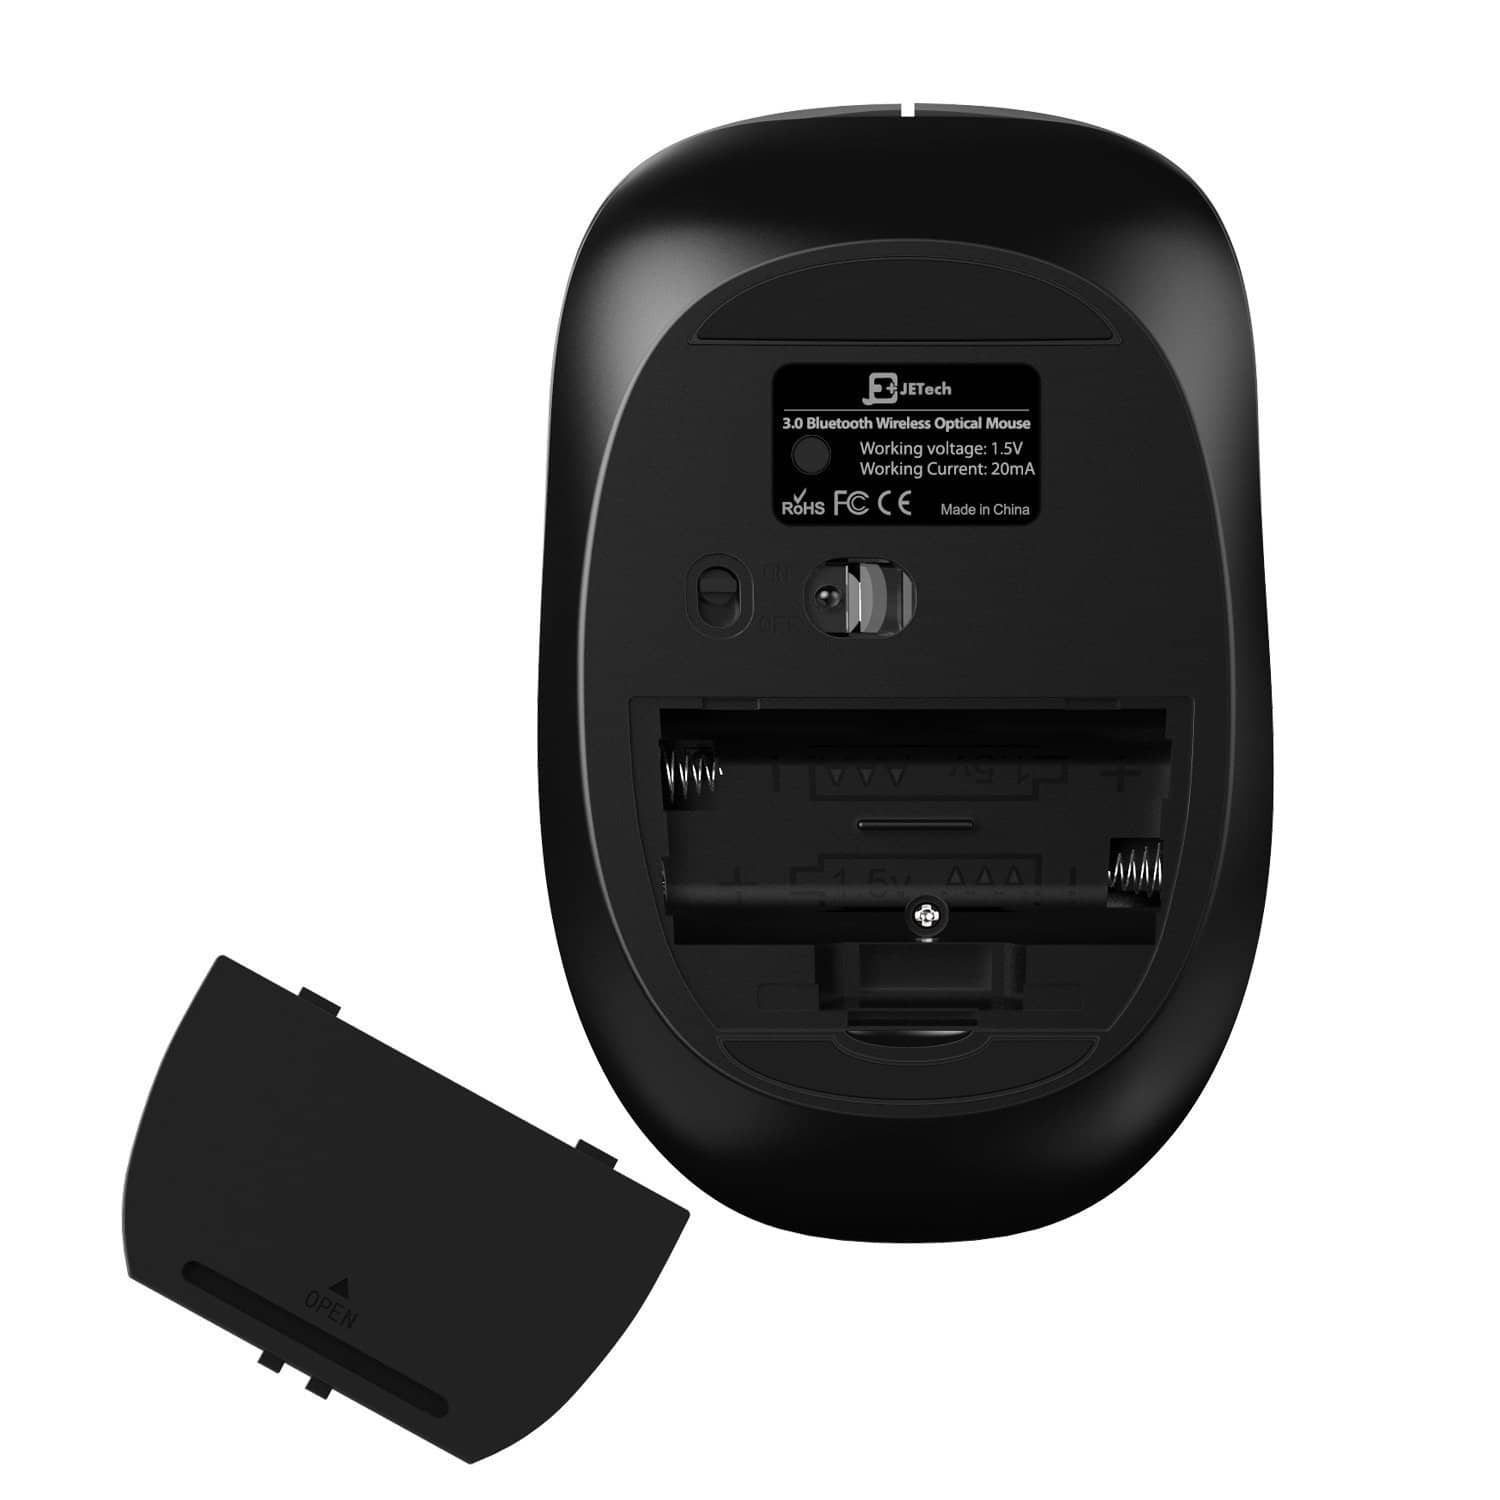 JETech M2260 Bluetooth Wireless Mouse